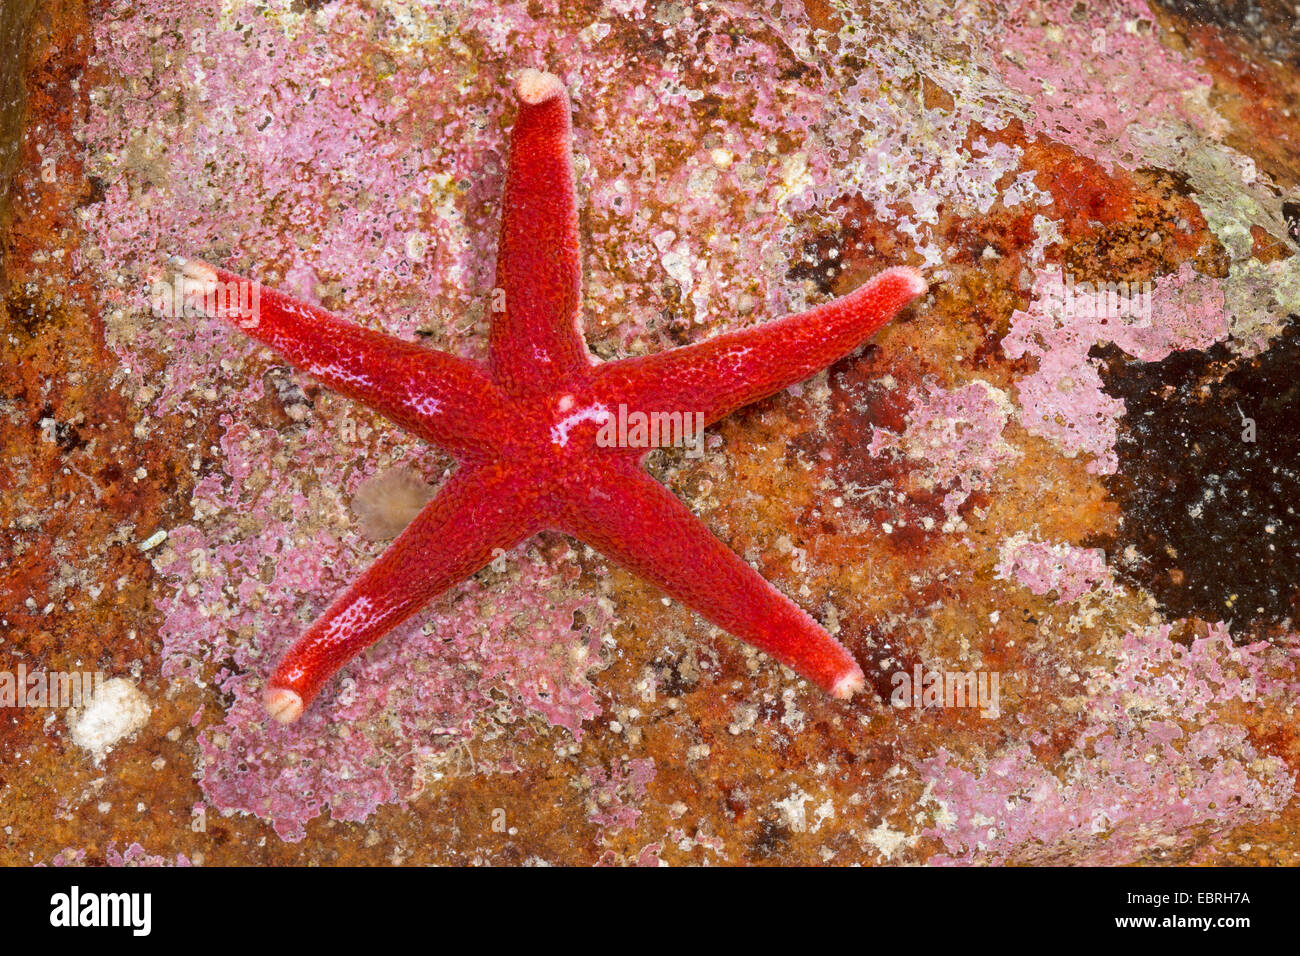 Atlantic Blut Sterne, schlanke Seestern, schlanke Polarmeer Stern, Blut Sterne, blutige Henry, nördlichen Henricia, Blut Seestern (Henricia spec, Henricia spec.), Ansicht von oben Stockfoto